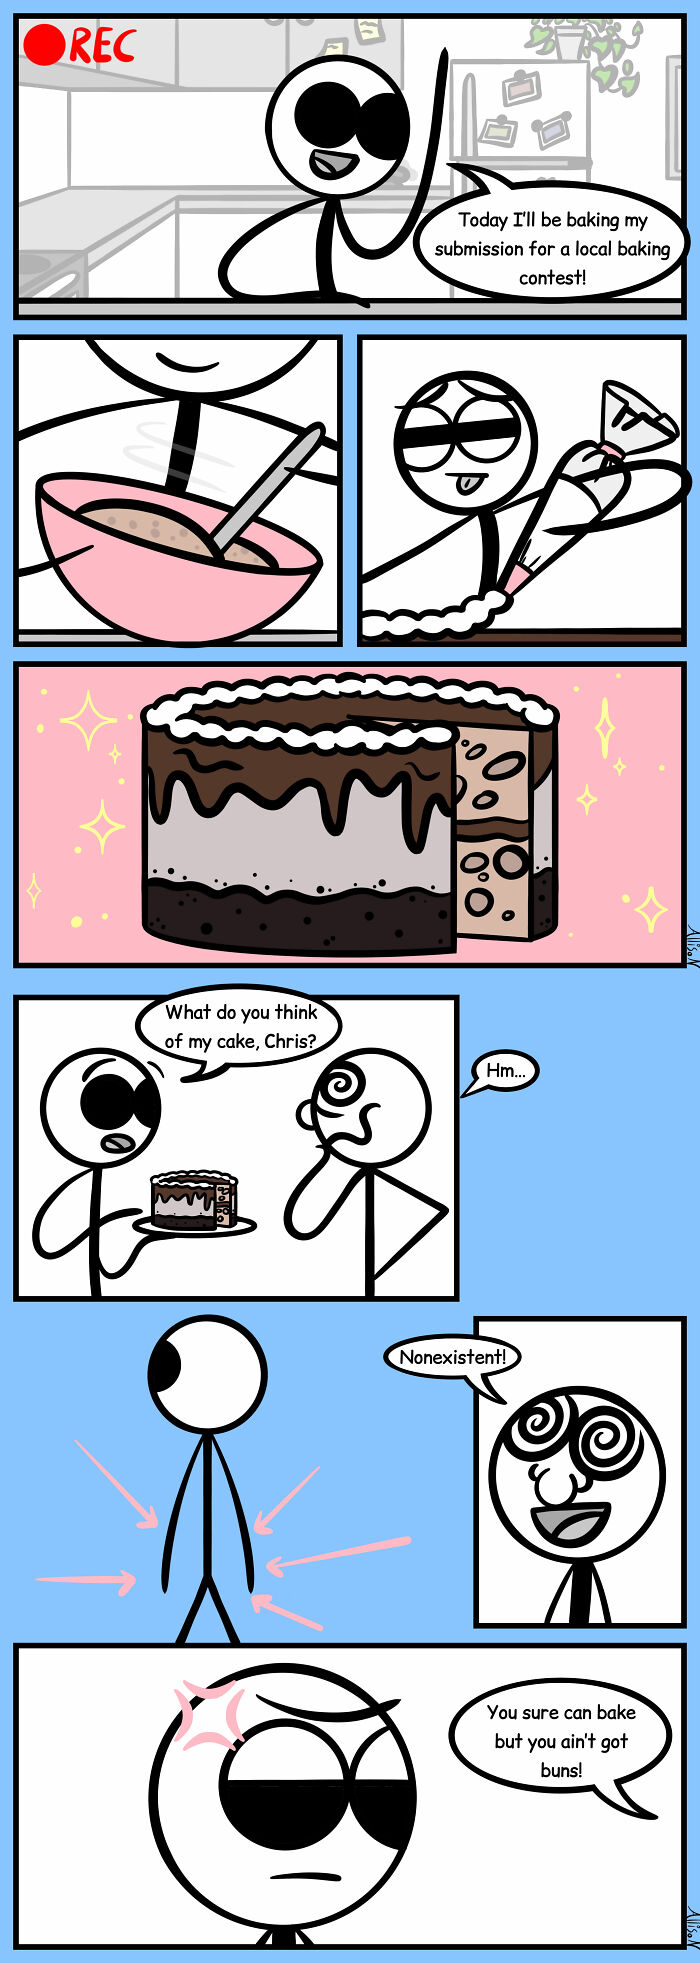 Cake?